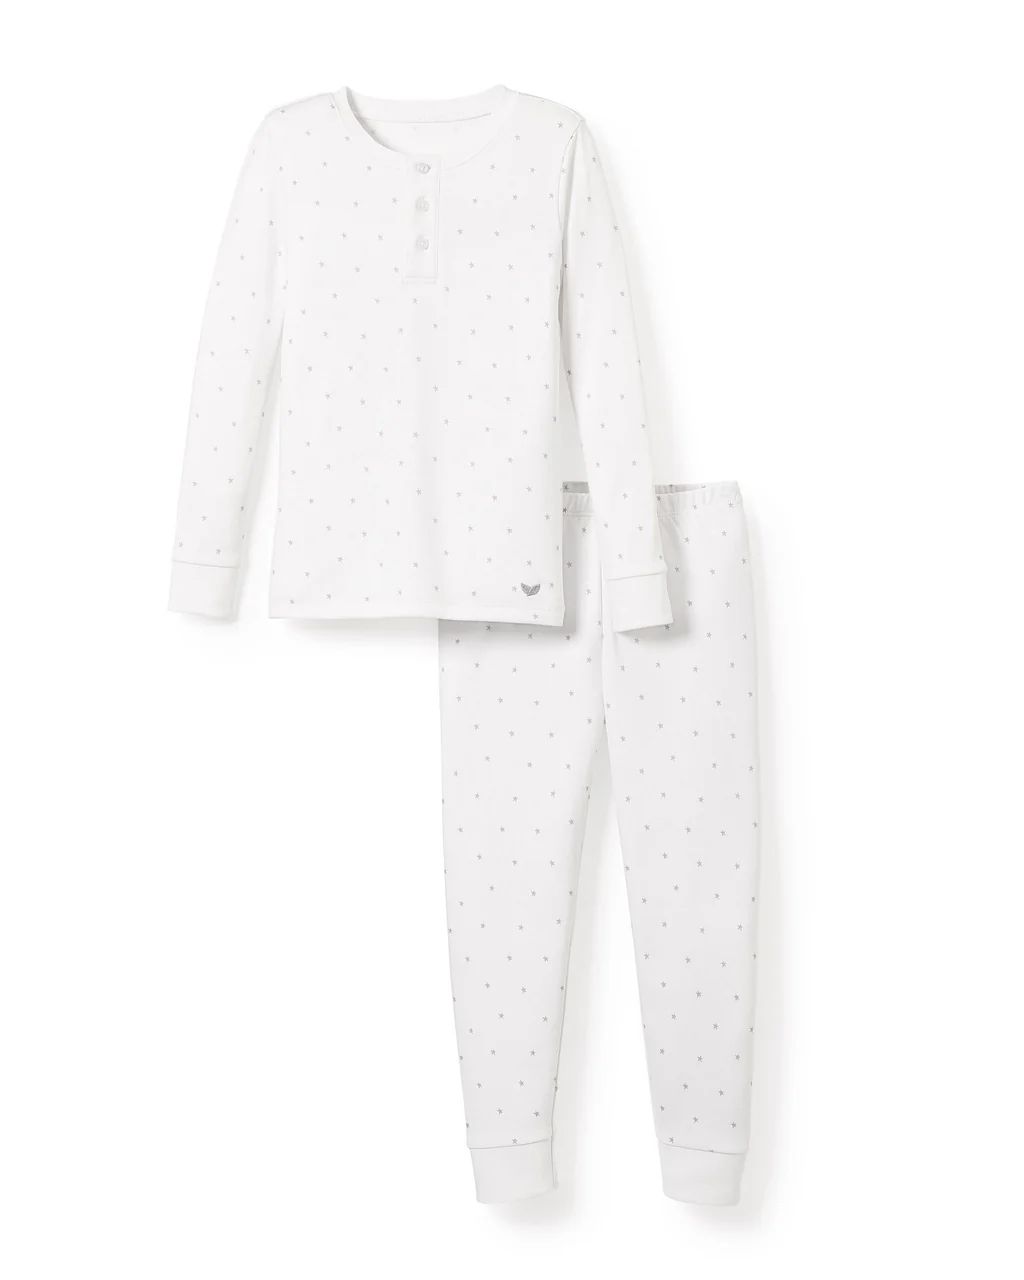 Kid's Pima Snug Fit Pajama Set in Grey Stars | Petite Plume